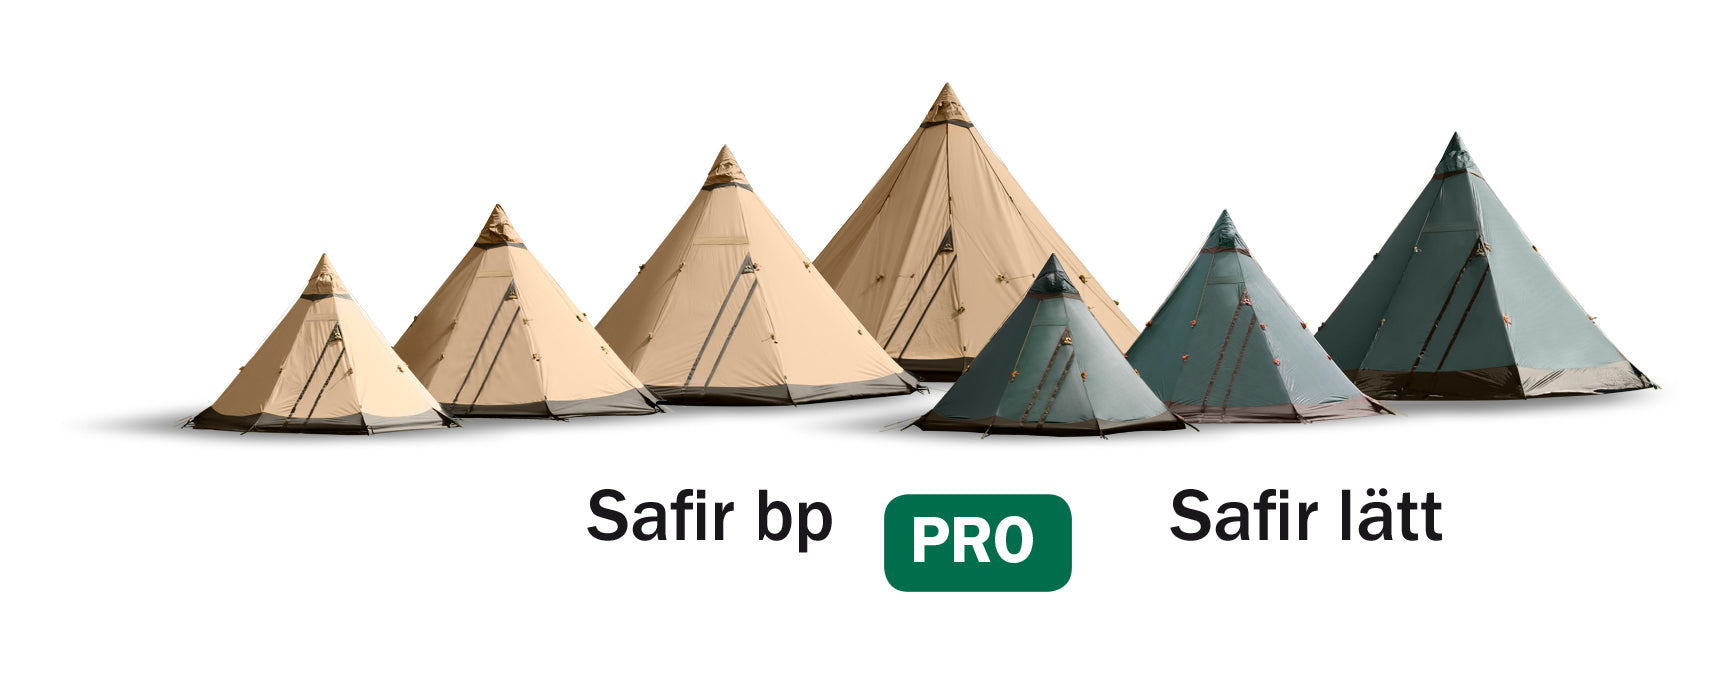 Safir lavvo telt